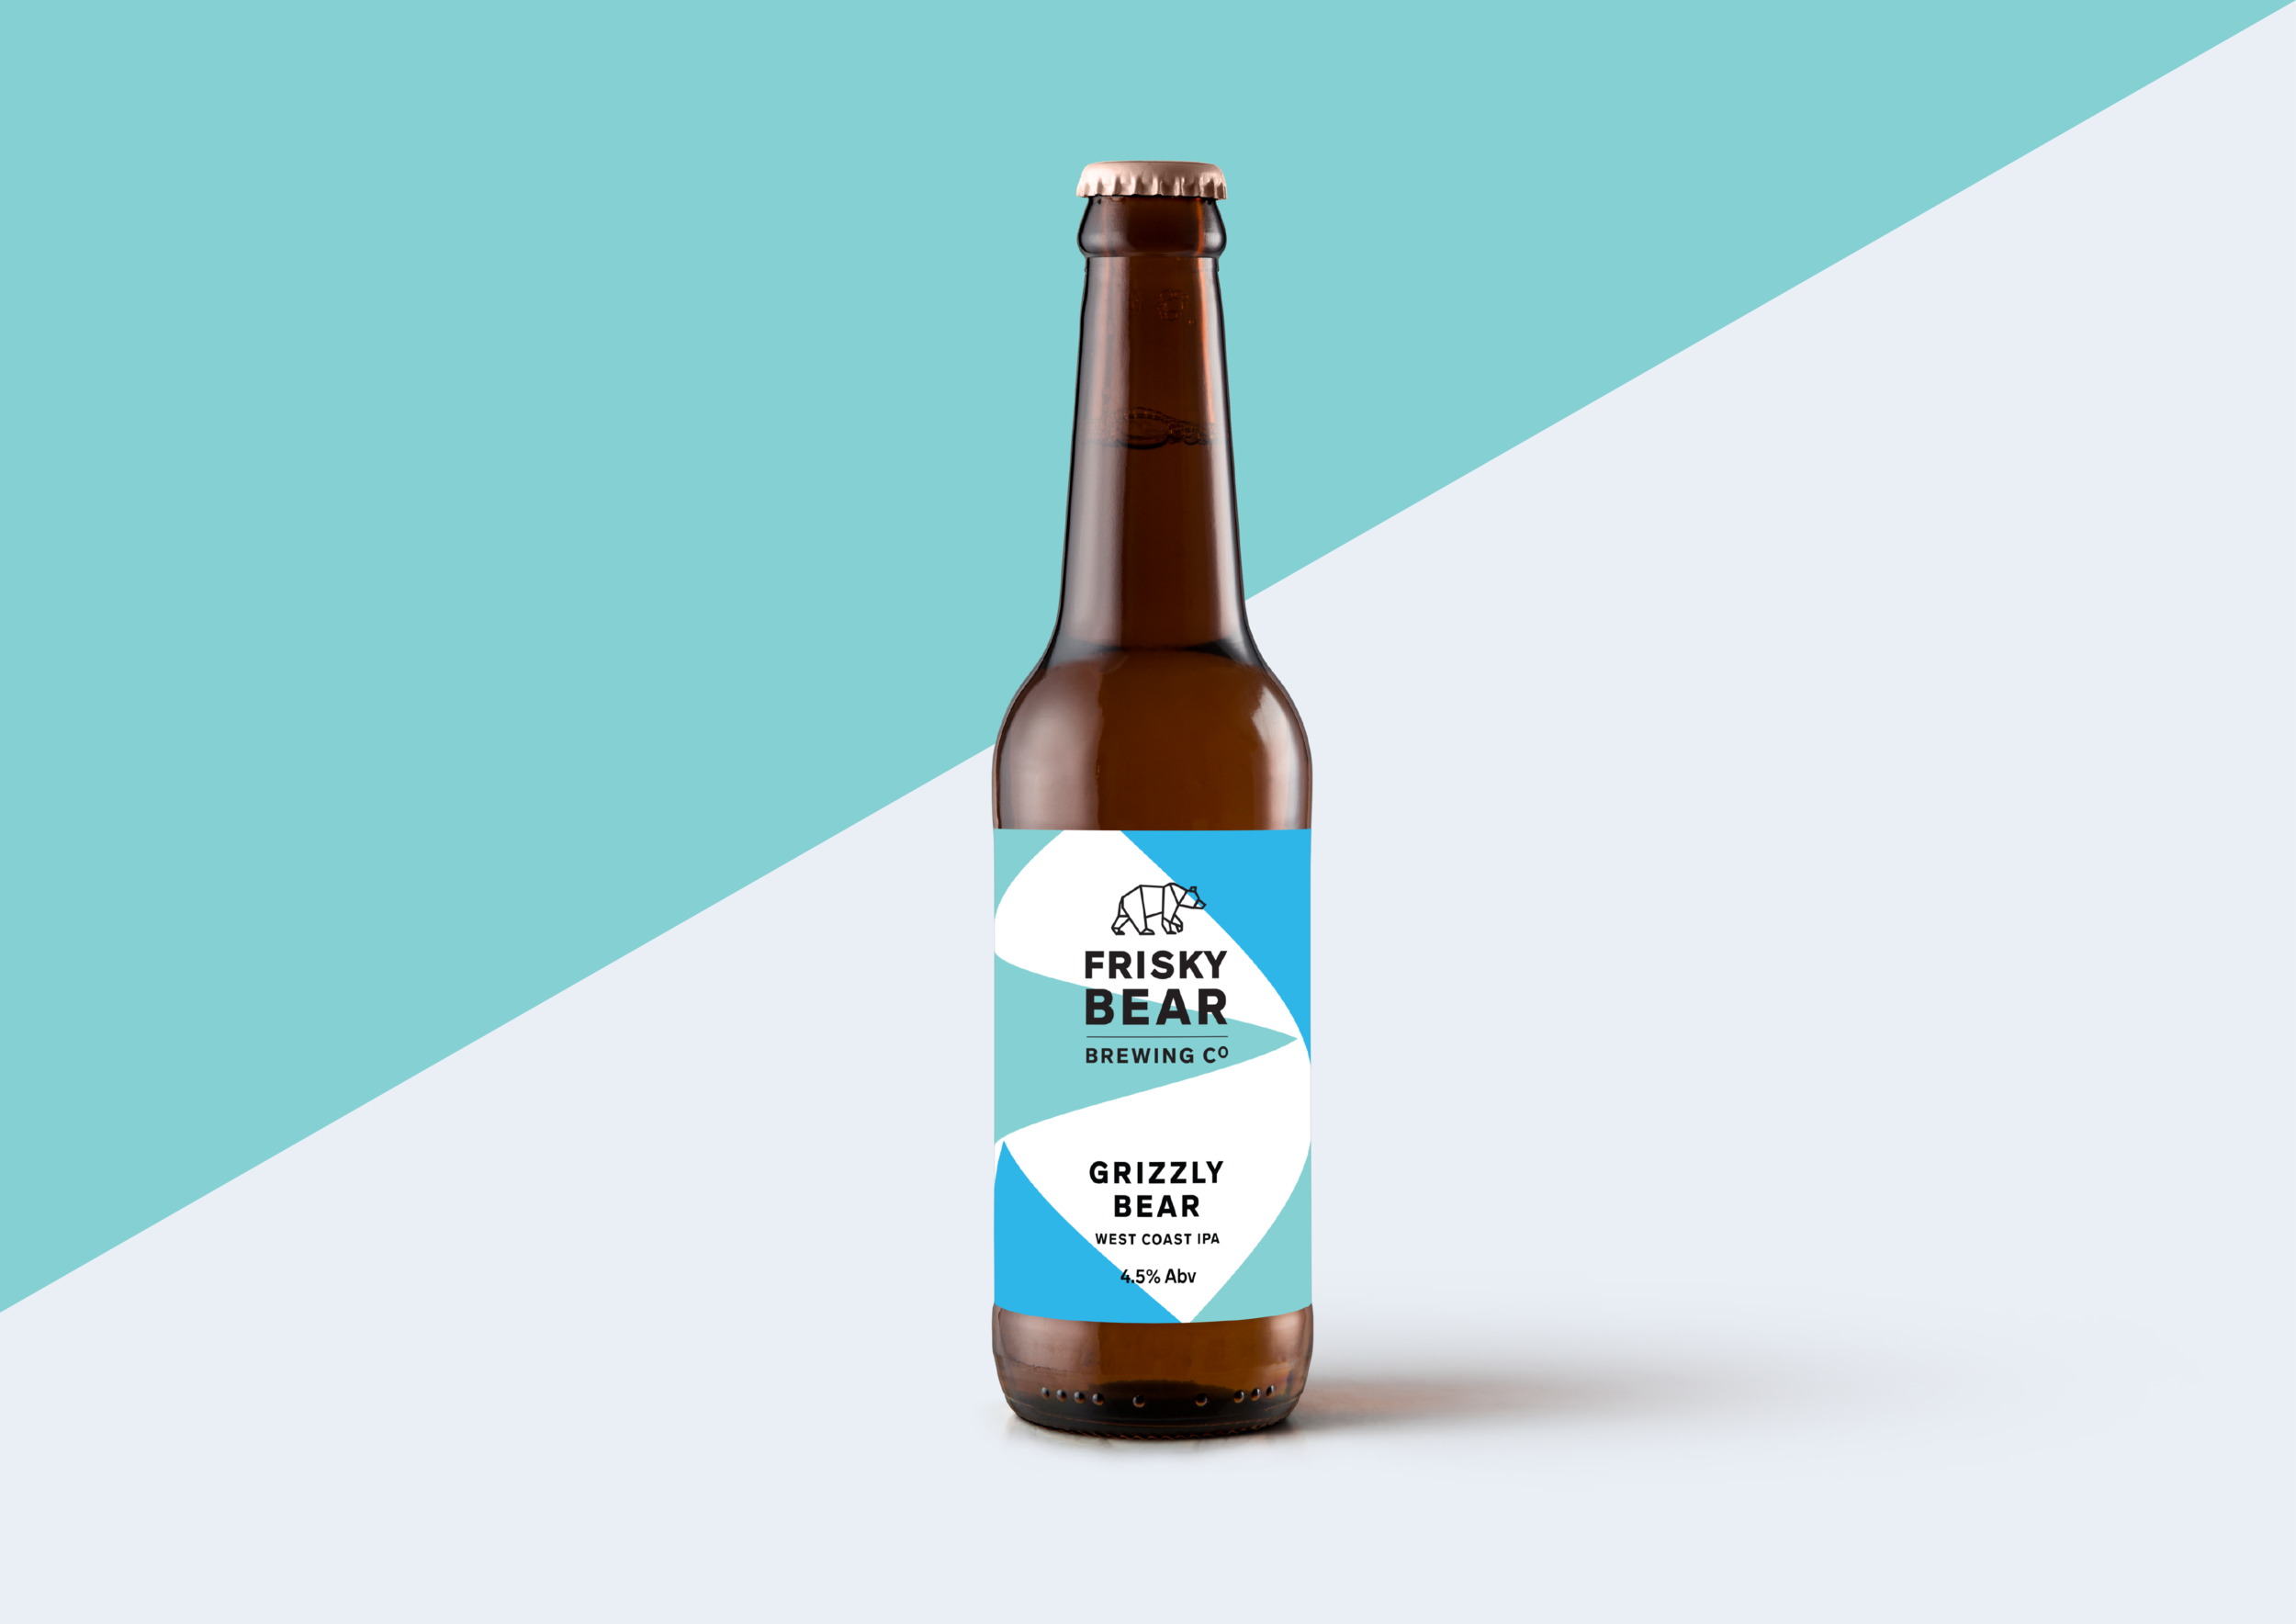 Freelance-graphic-designer-A brown beer bottle of Frisky Bear Brewing Co 